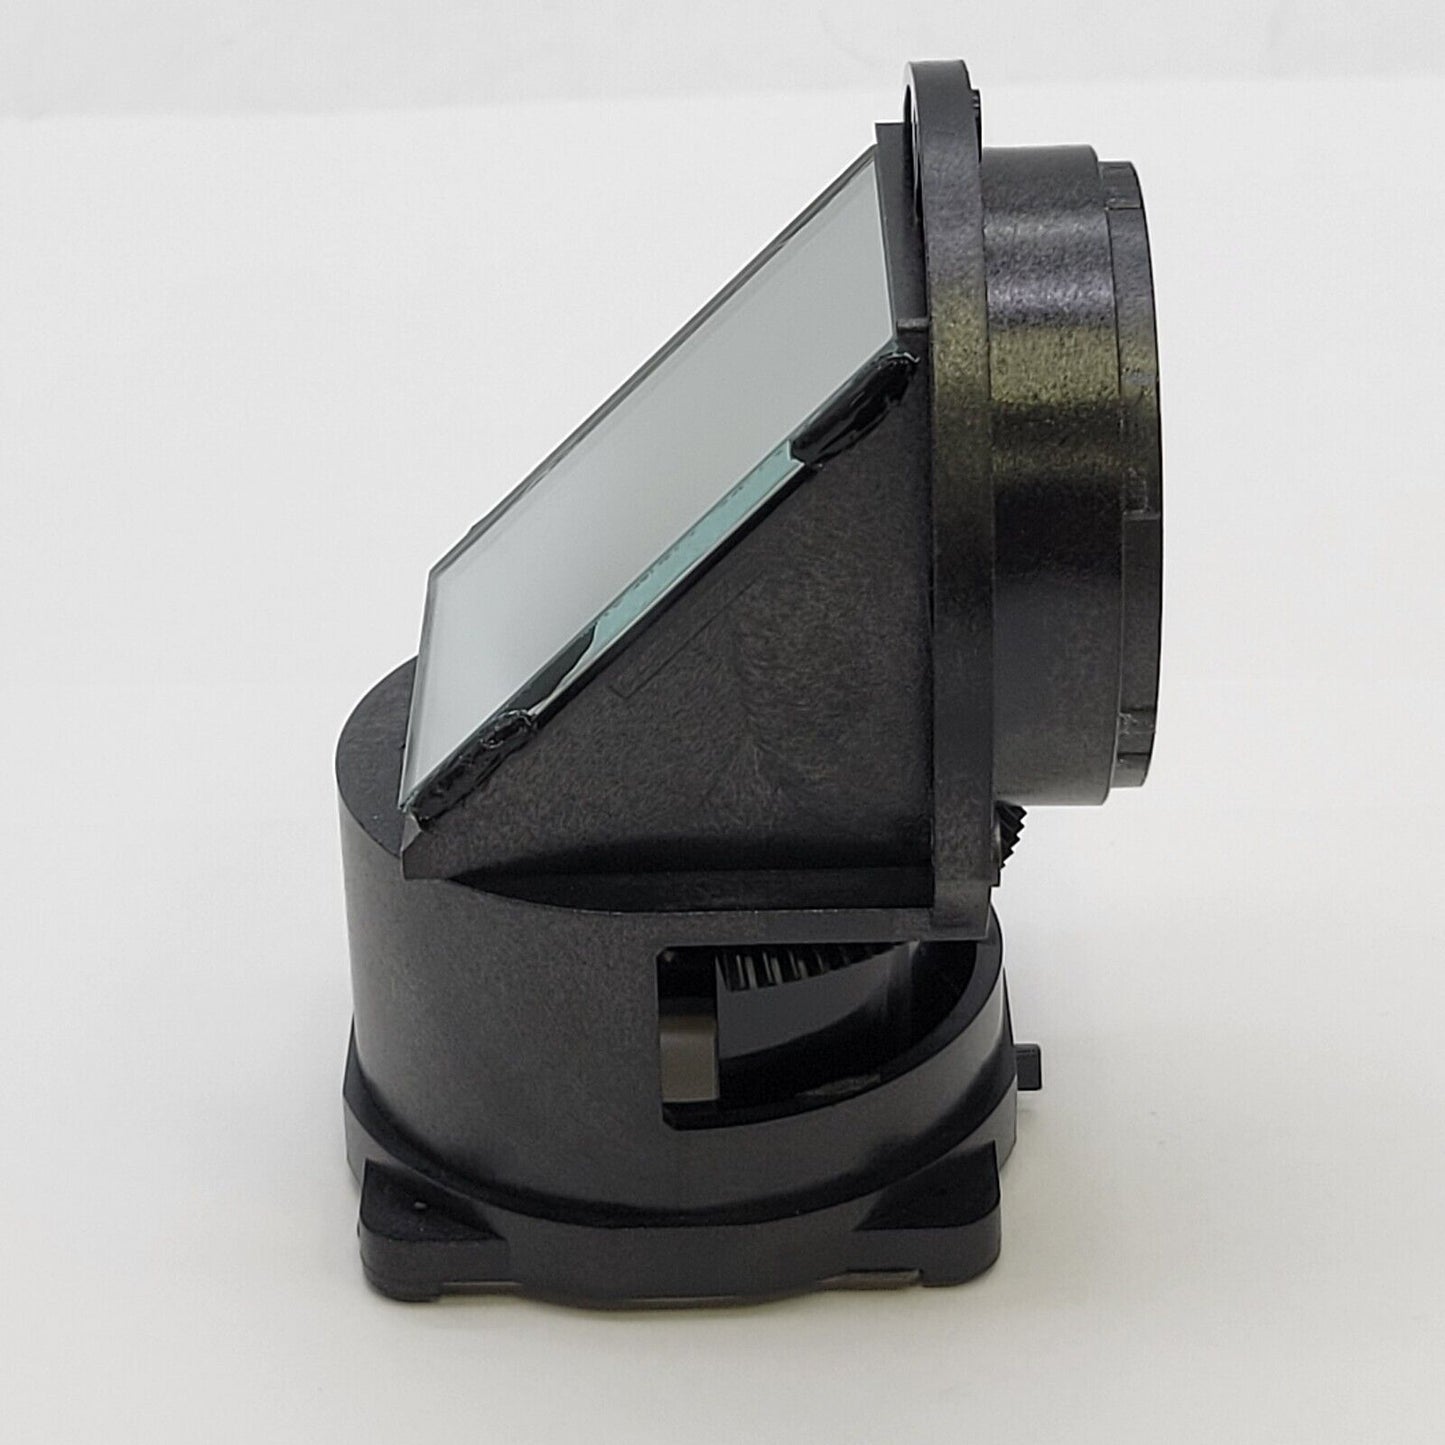 Nikon Microscope Eclipse E400 Field Diaphragm & Mirror Repair / Replacement Part - microscopemarketplace